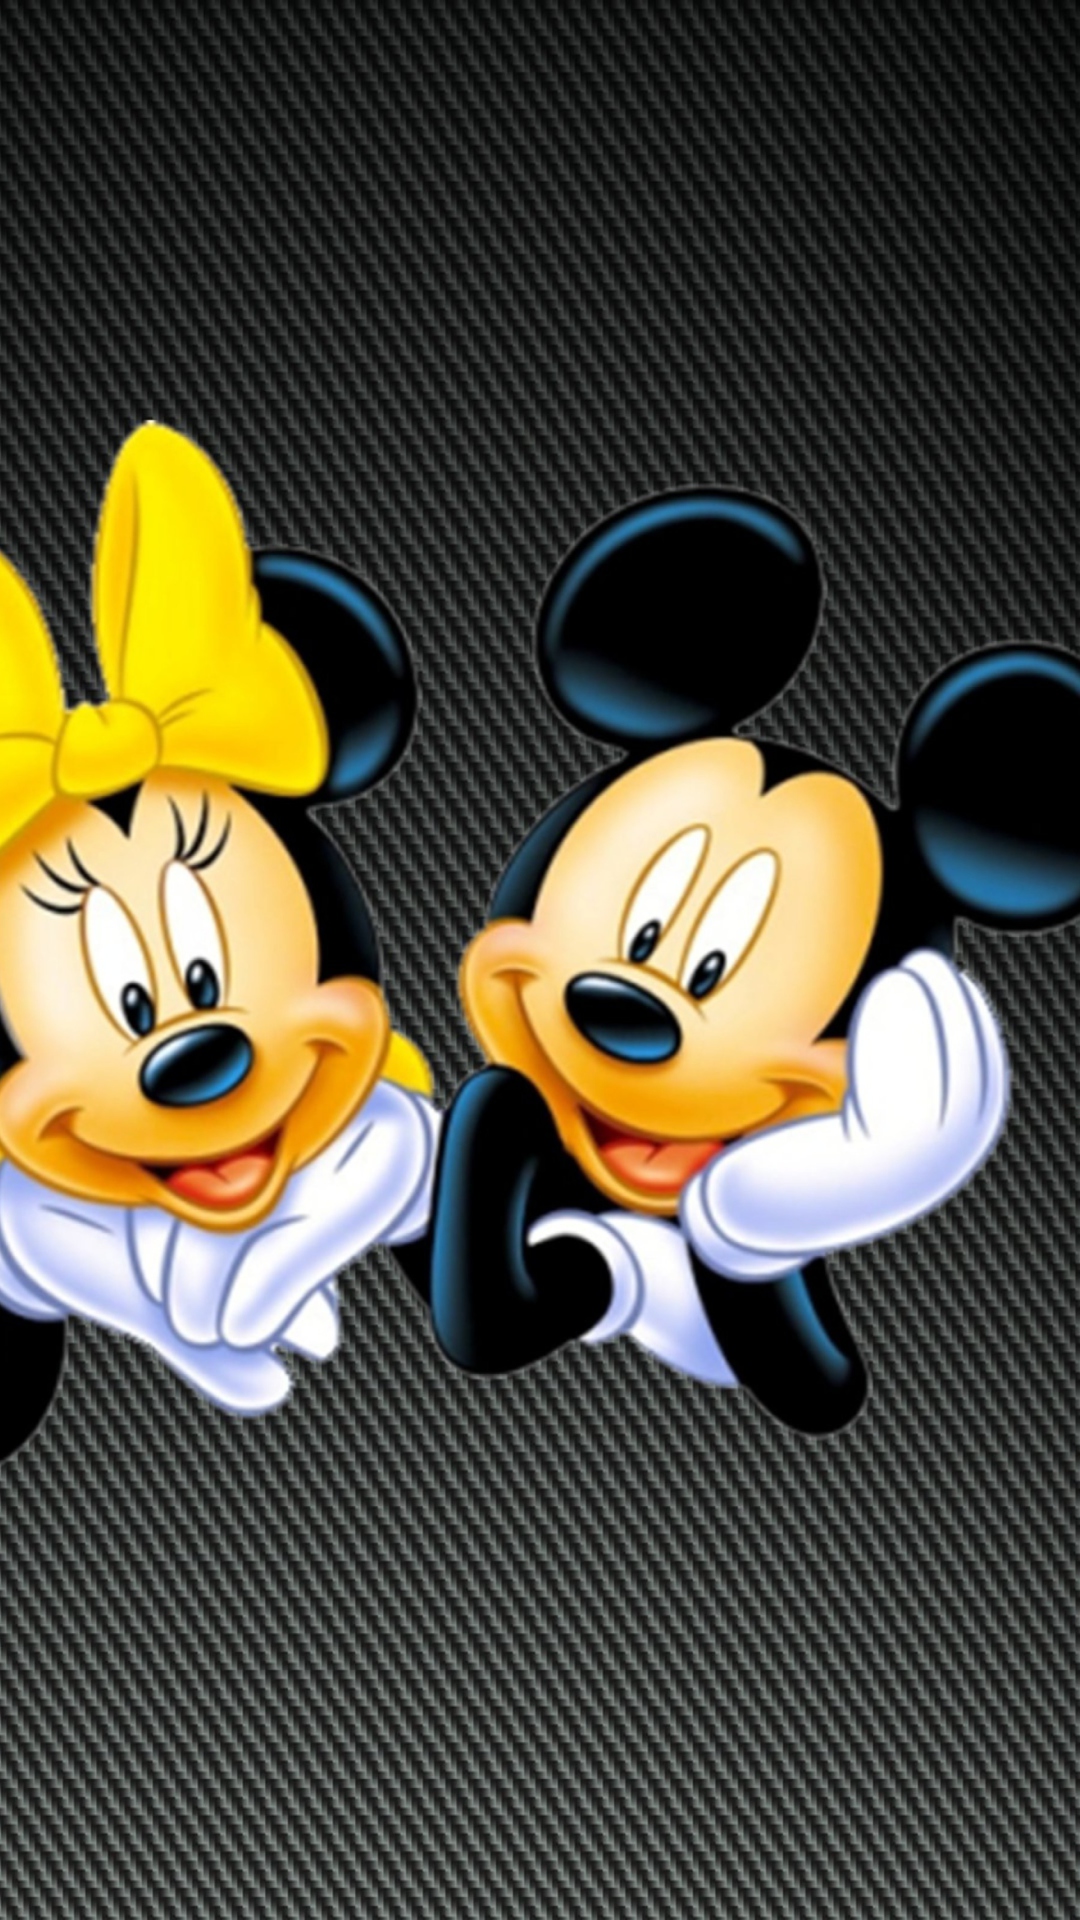 Das Mickey And Minnie Wallpaper 1080x1920